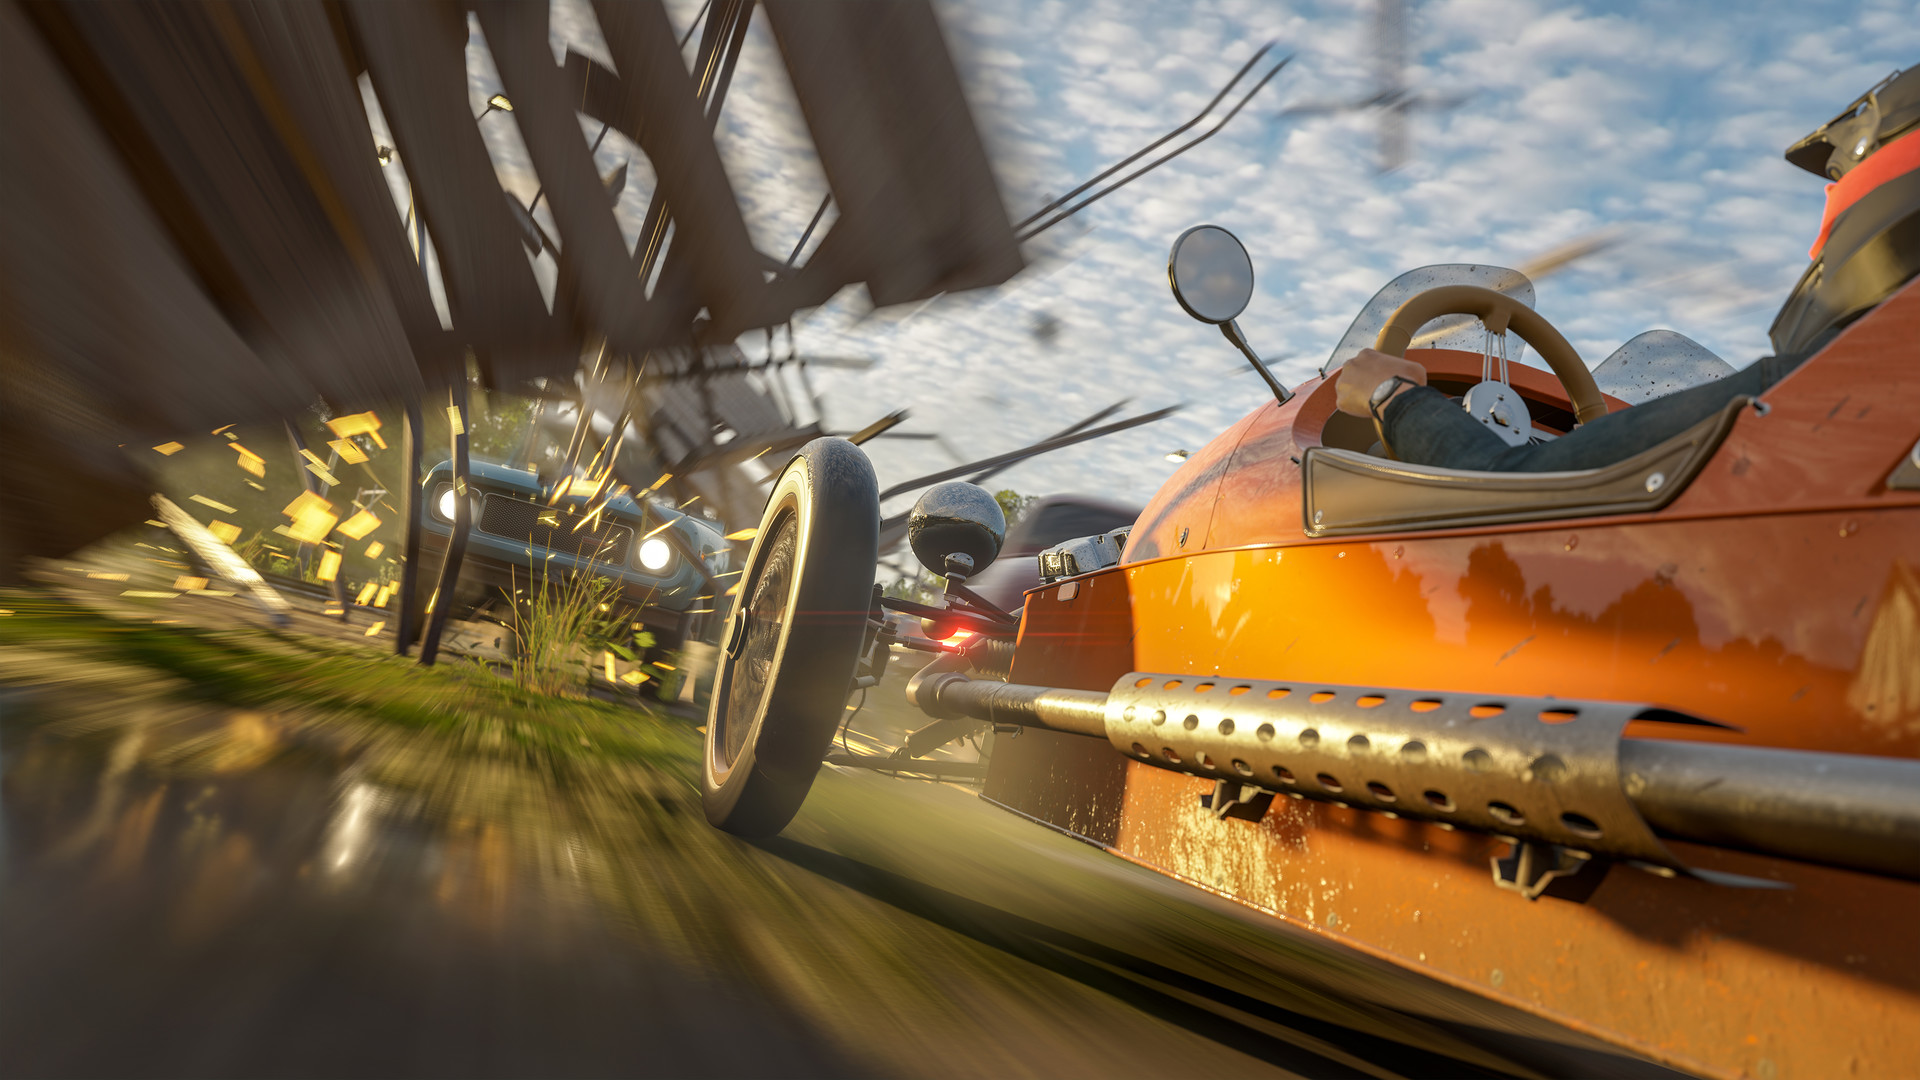 Forza Horizon 4 Images 